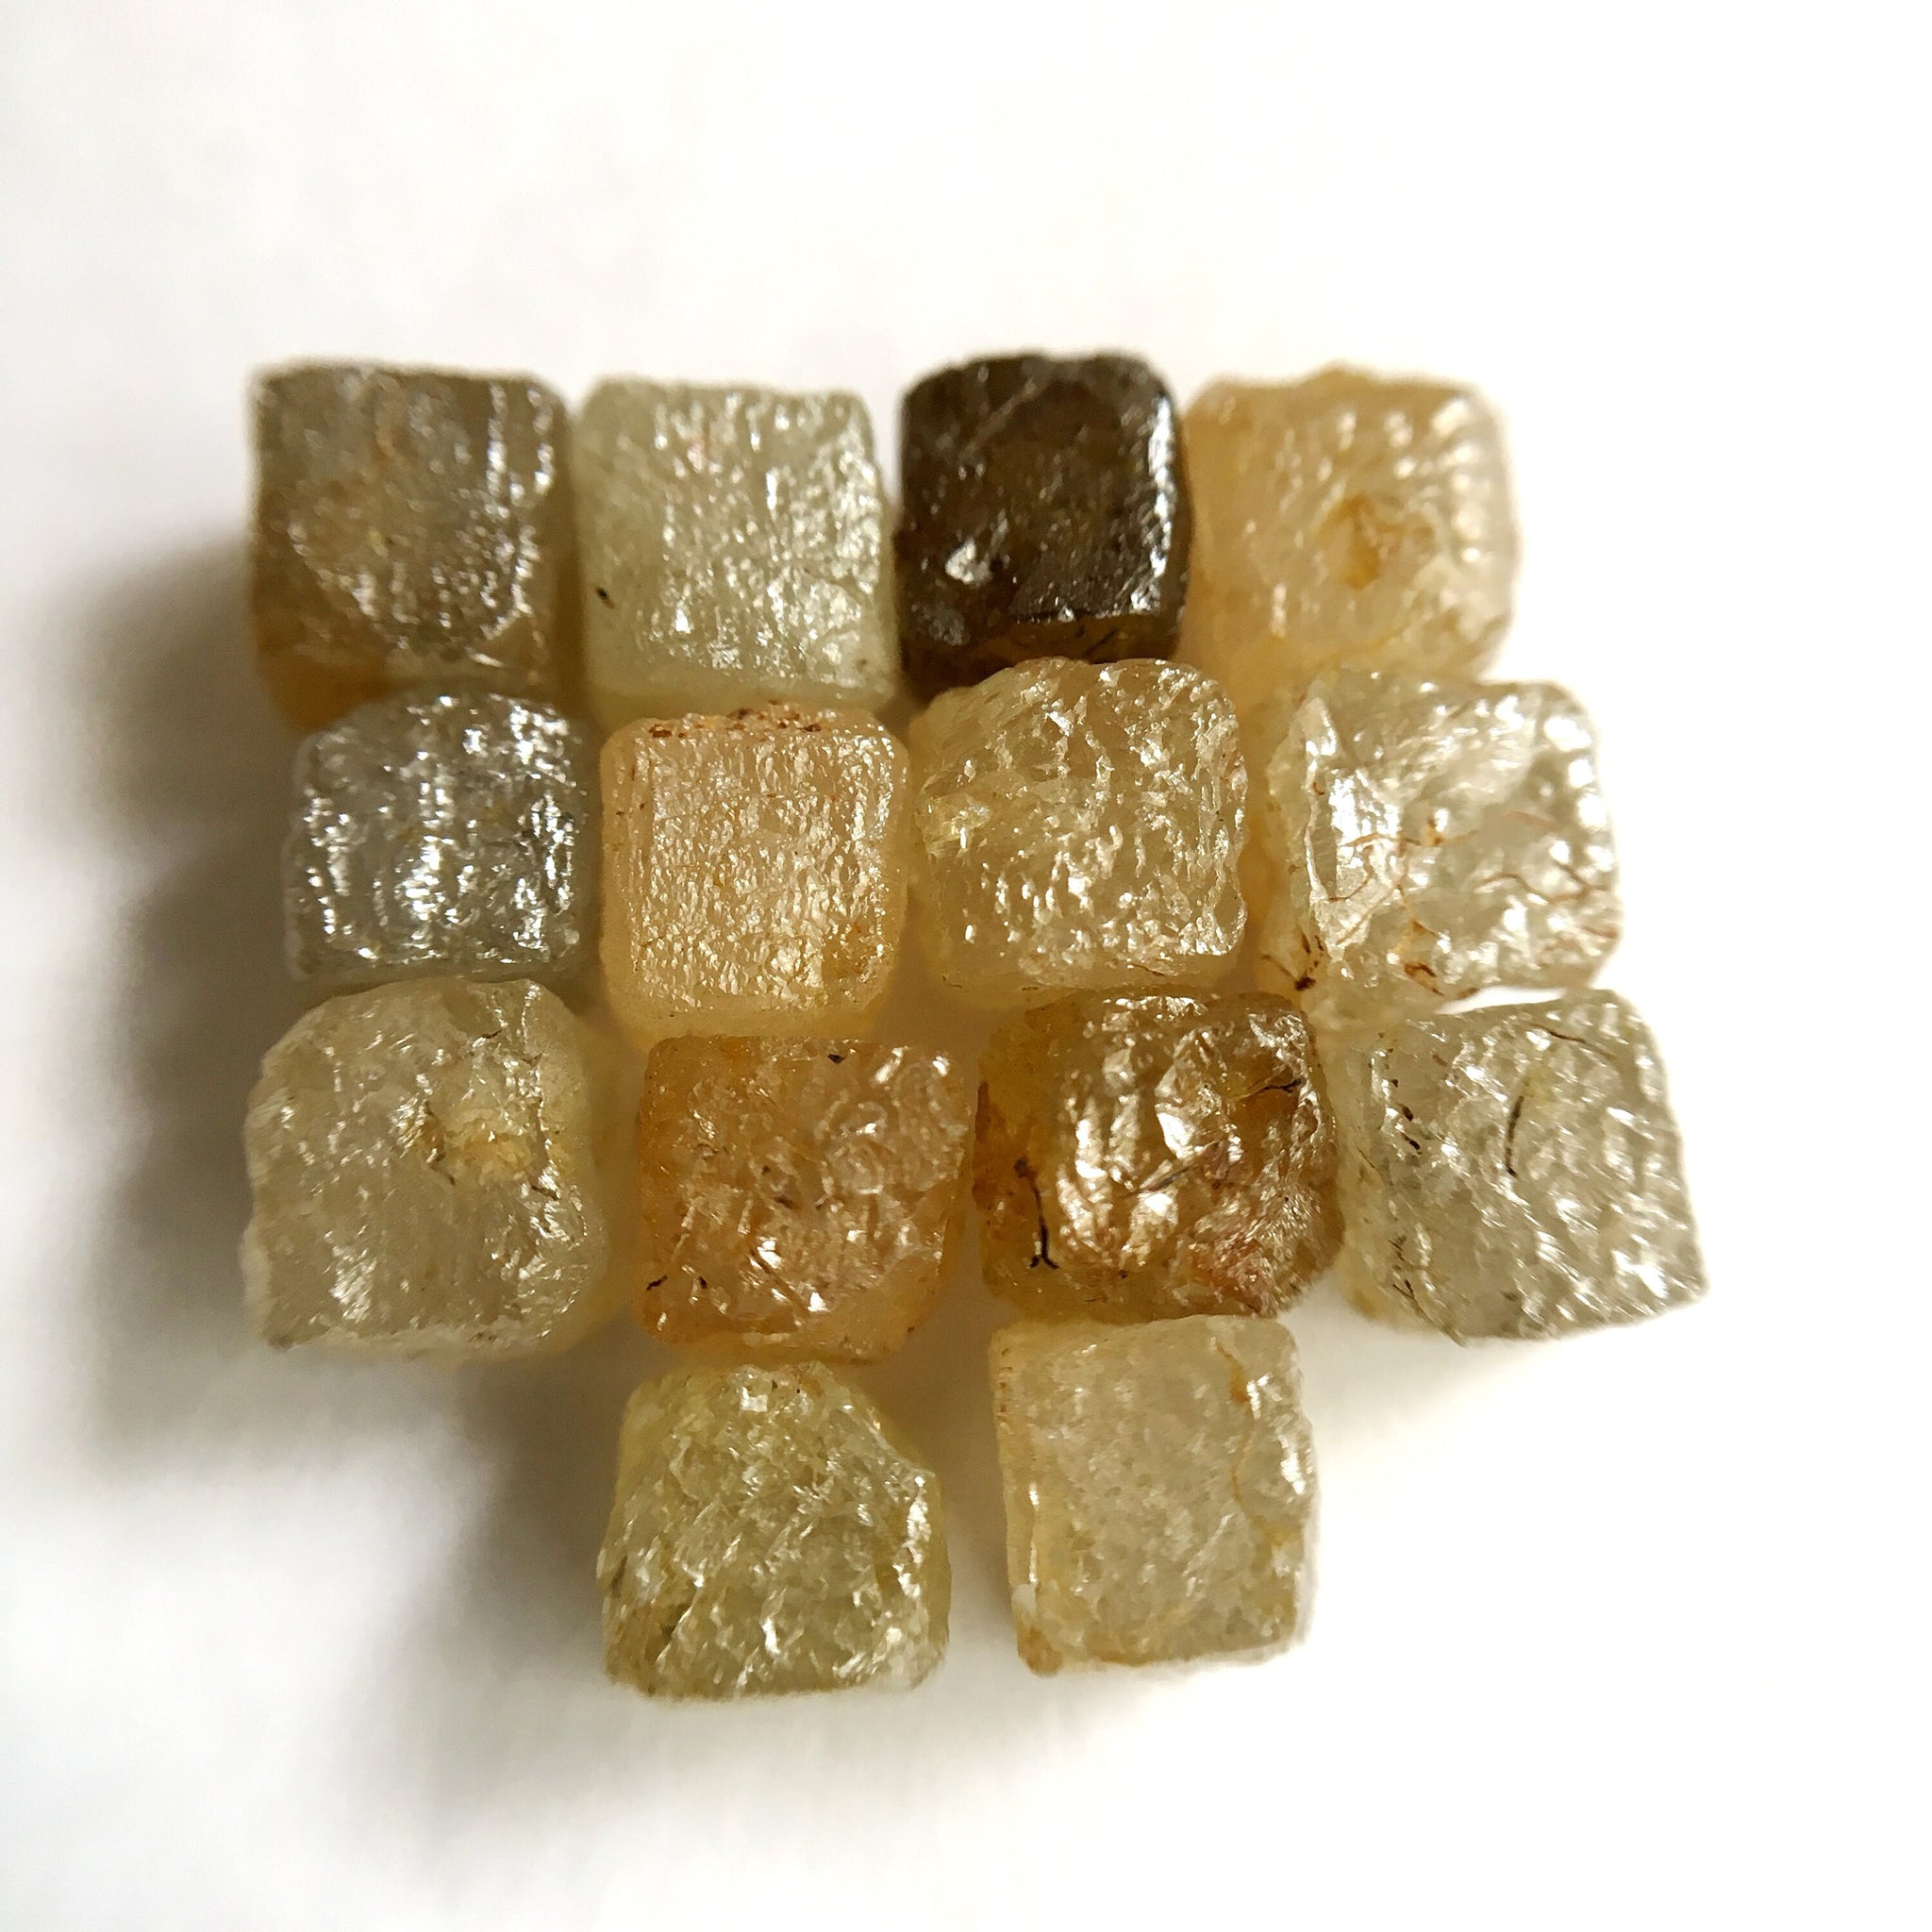 4.20 mm to 4.50 mm Size Natural Mix Color Conflict Free ! Cube Shape Loose Raw Rough Diamonds Lot ! 14 Pcs 11.66 Ct Lot Rough Cube Diamonds